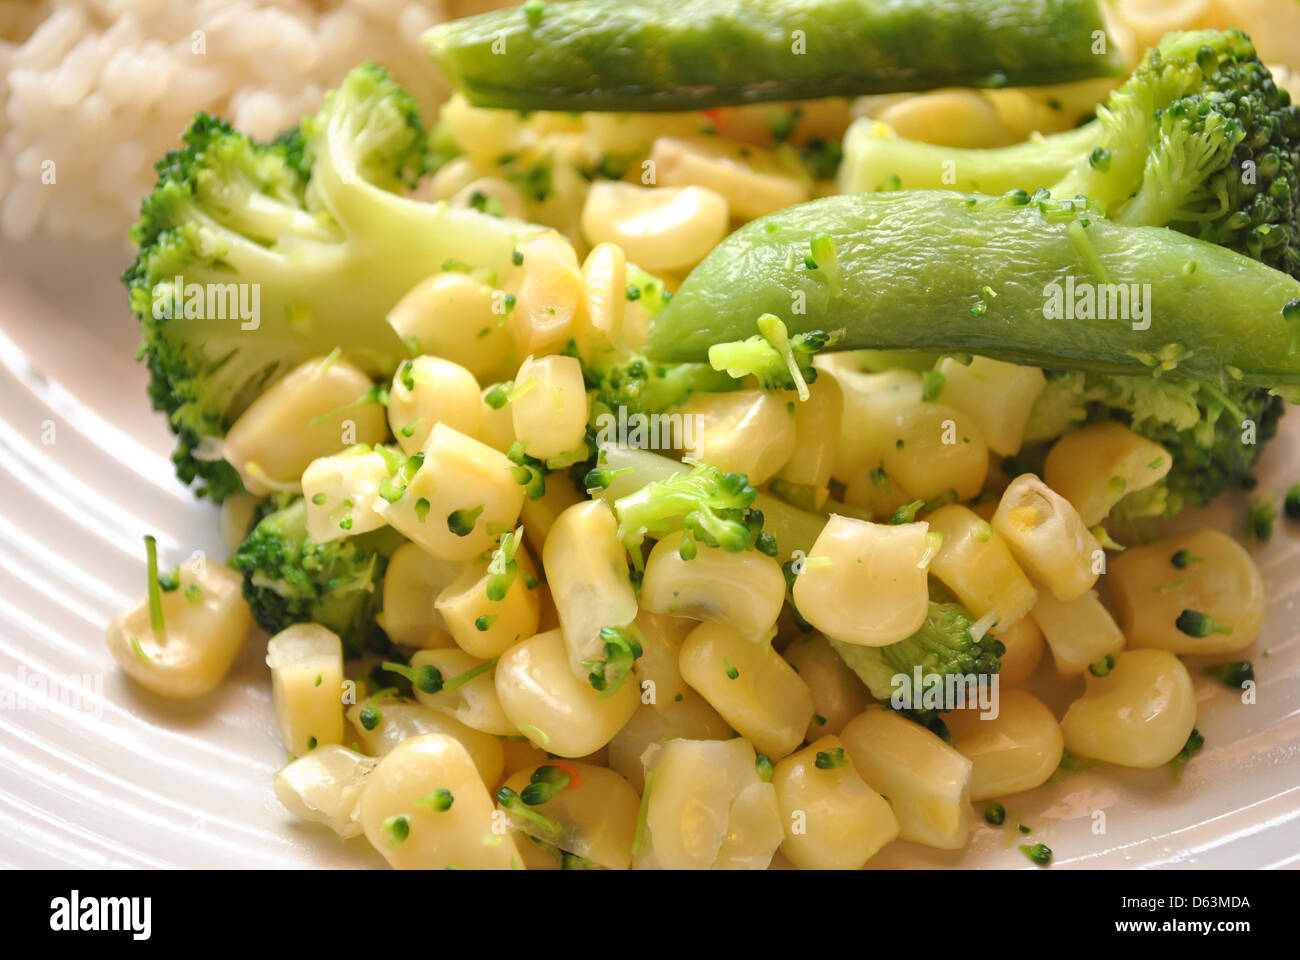 Mixed Veggies for Dinner Stock Photo